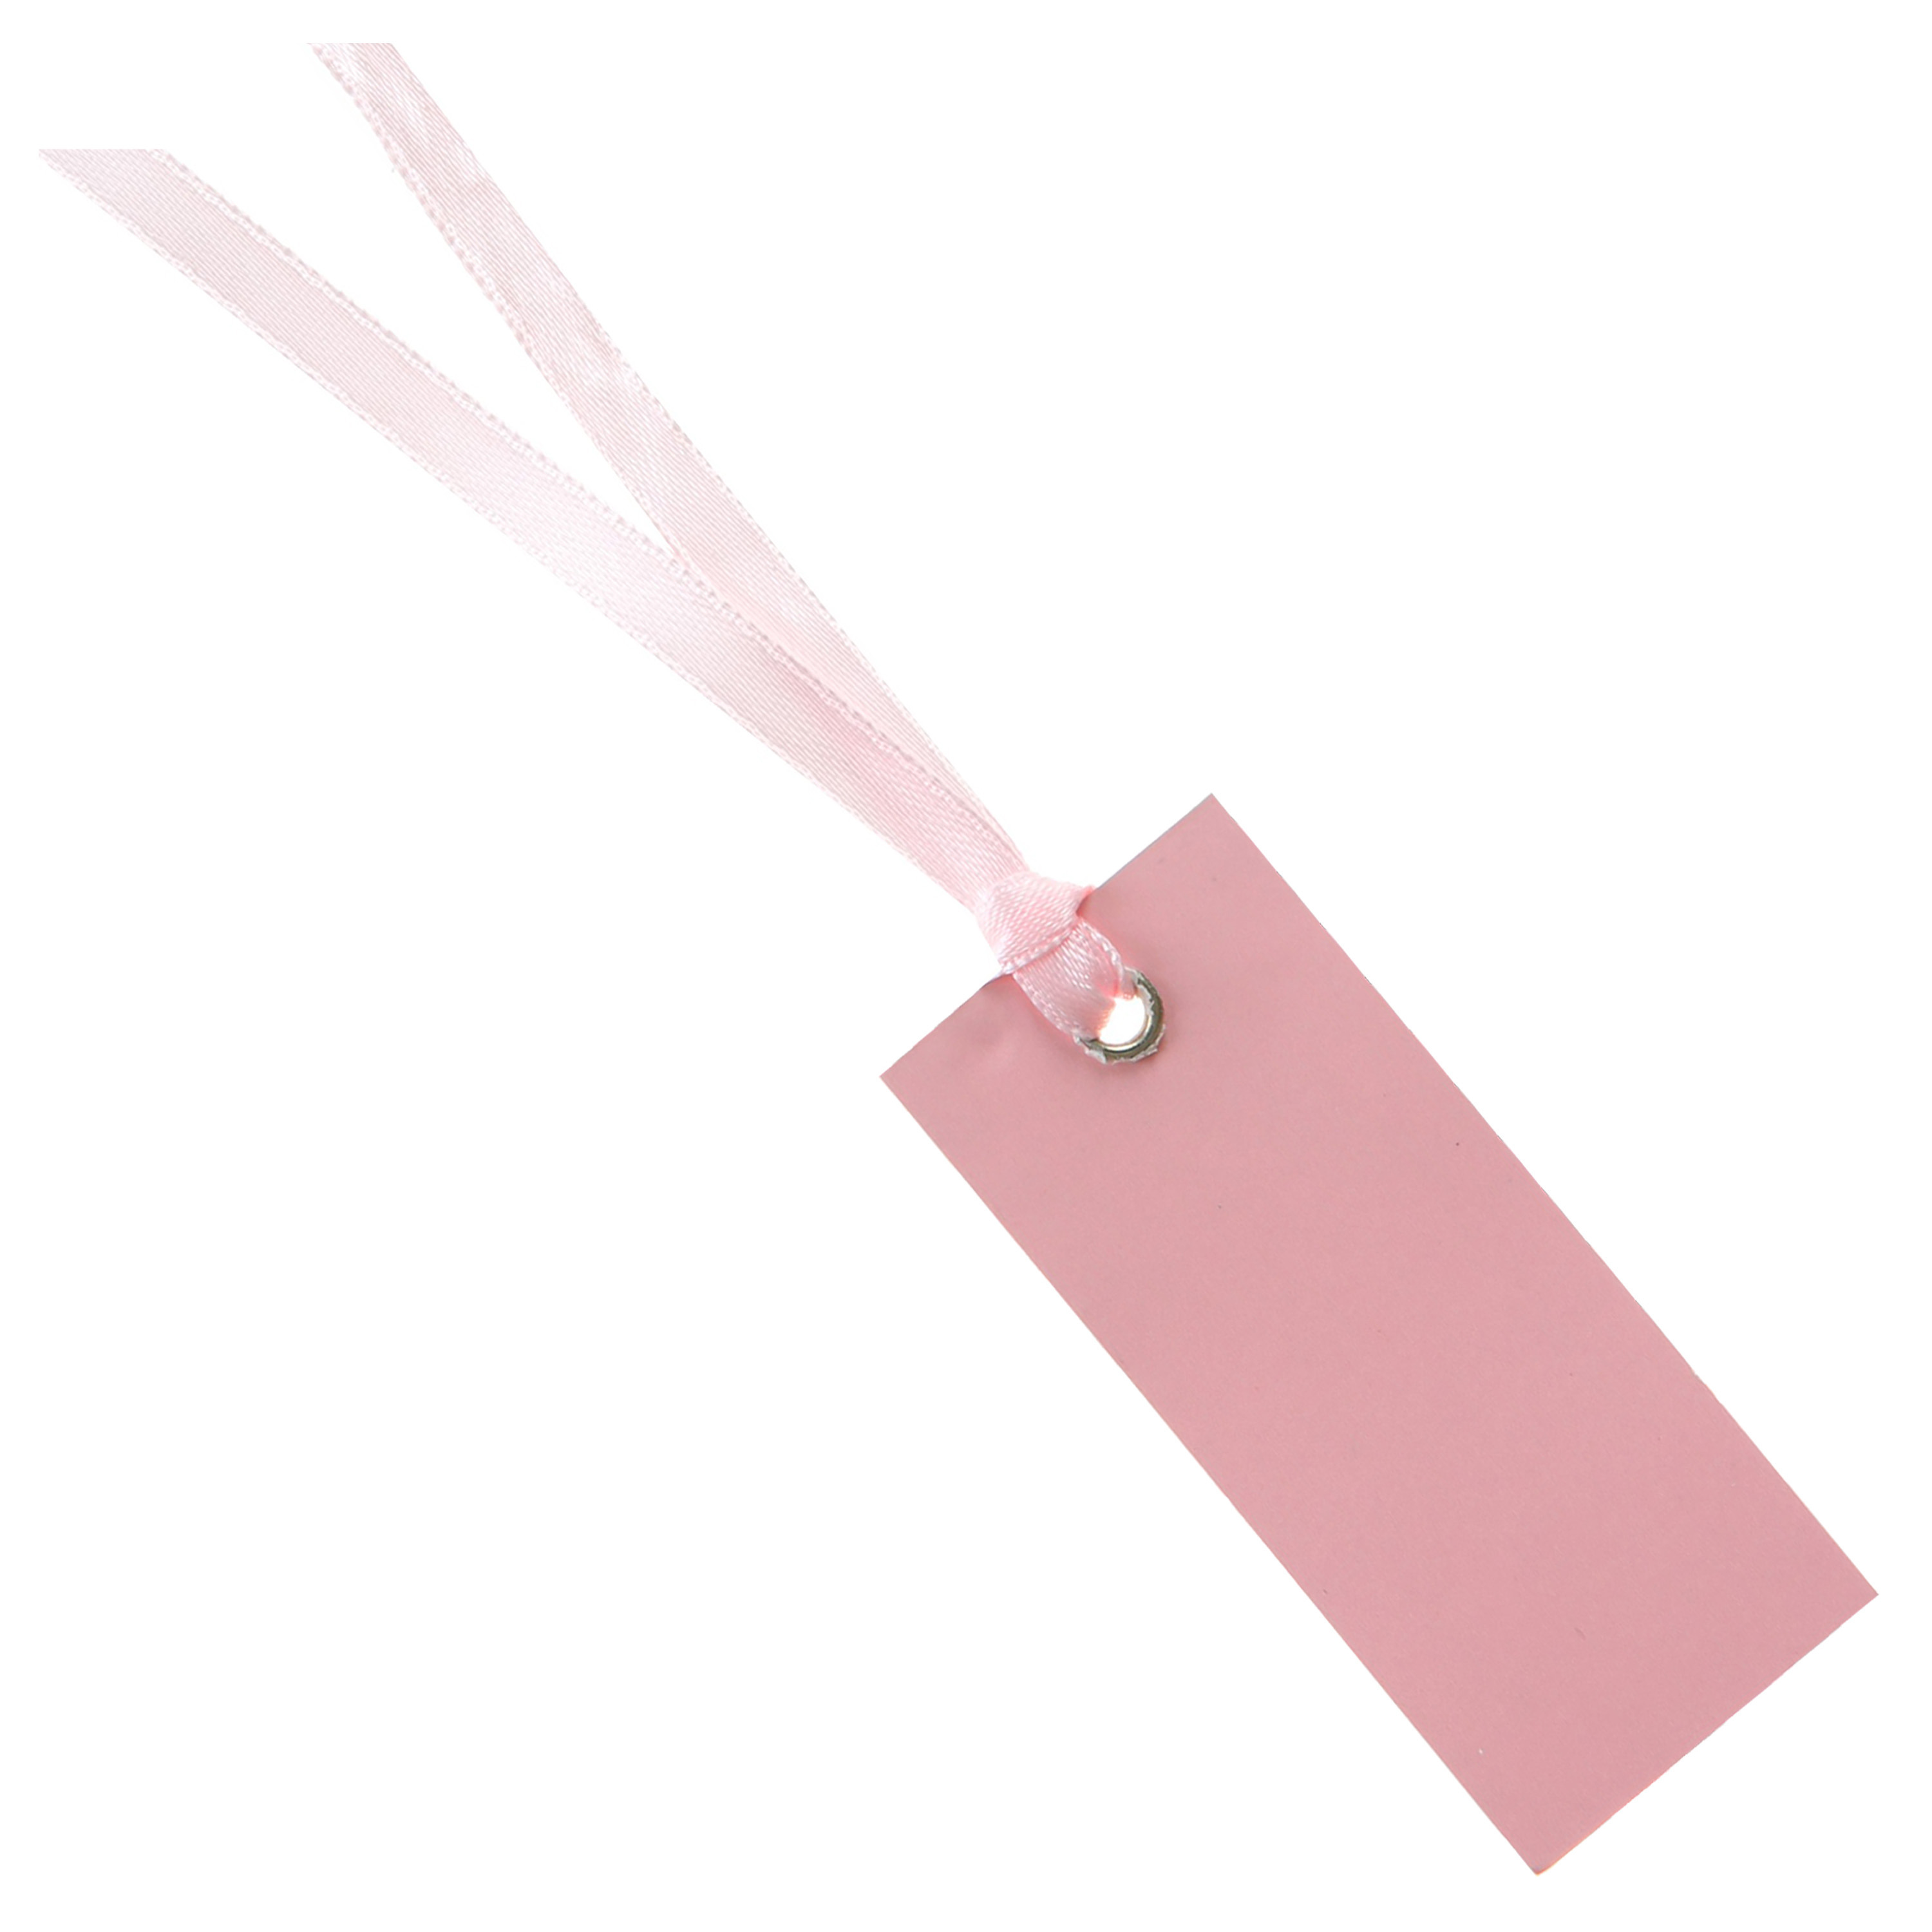 Cadeaulabels met lintje set 12x stuks roze 3 x 7 cm naam tags